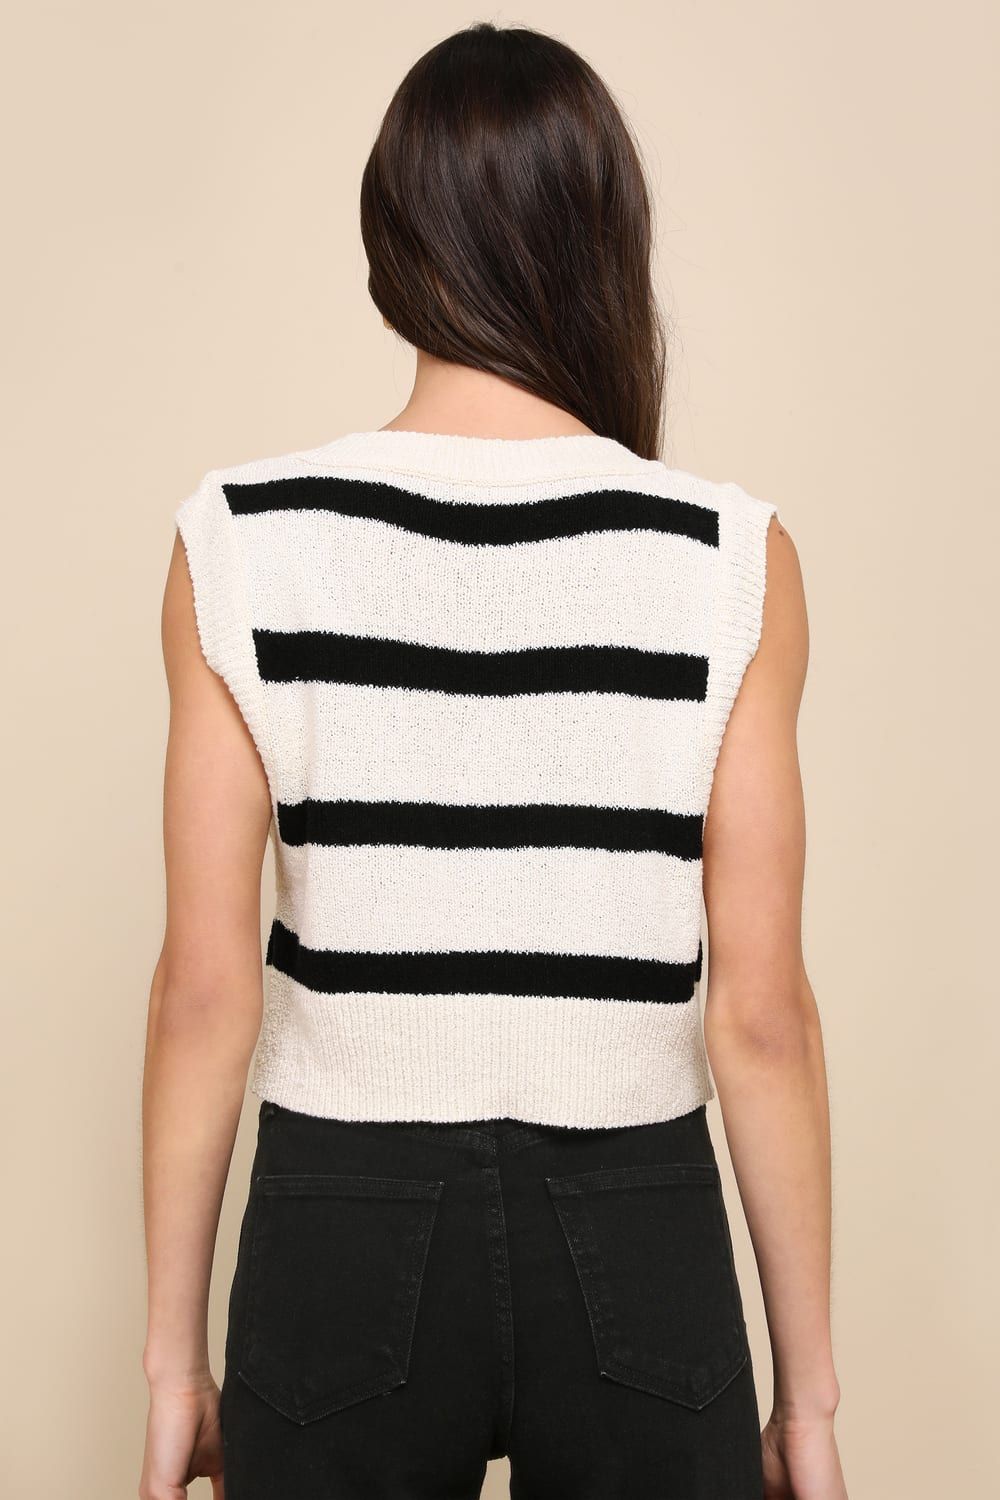 Santa Monica Black and White Striped Knit Sweater Vest Top | Lulus